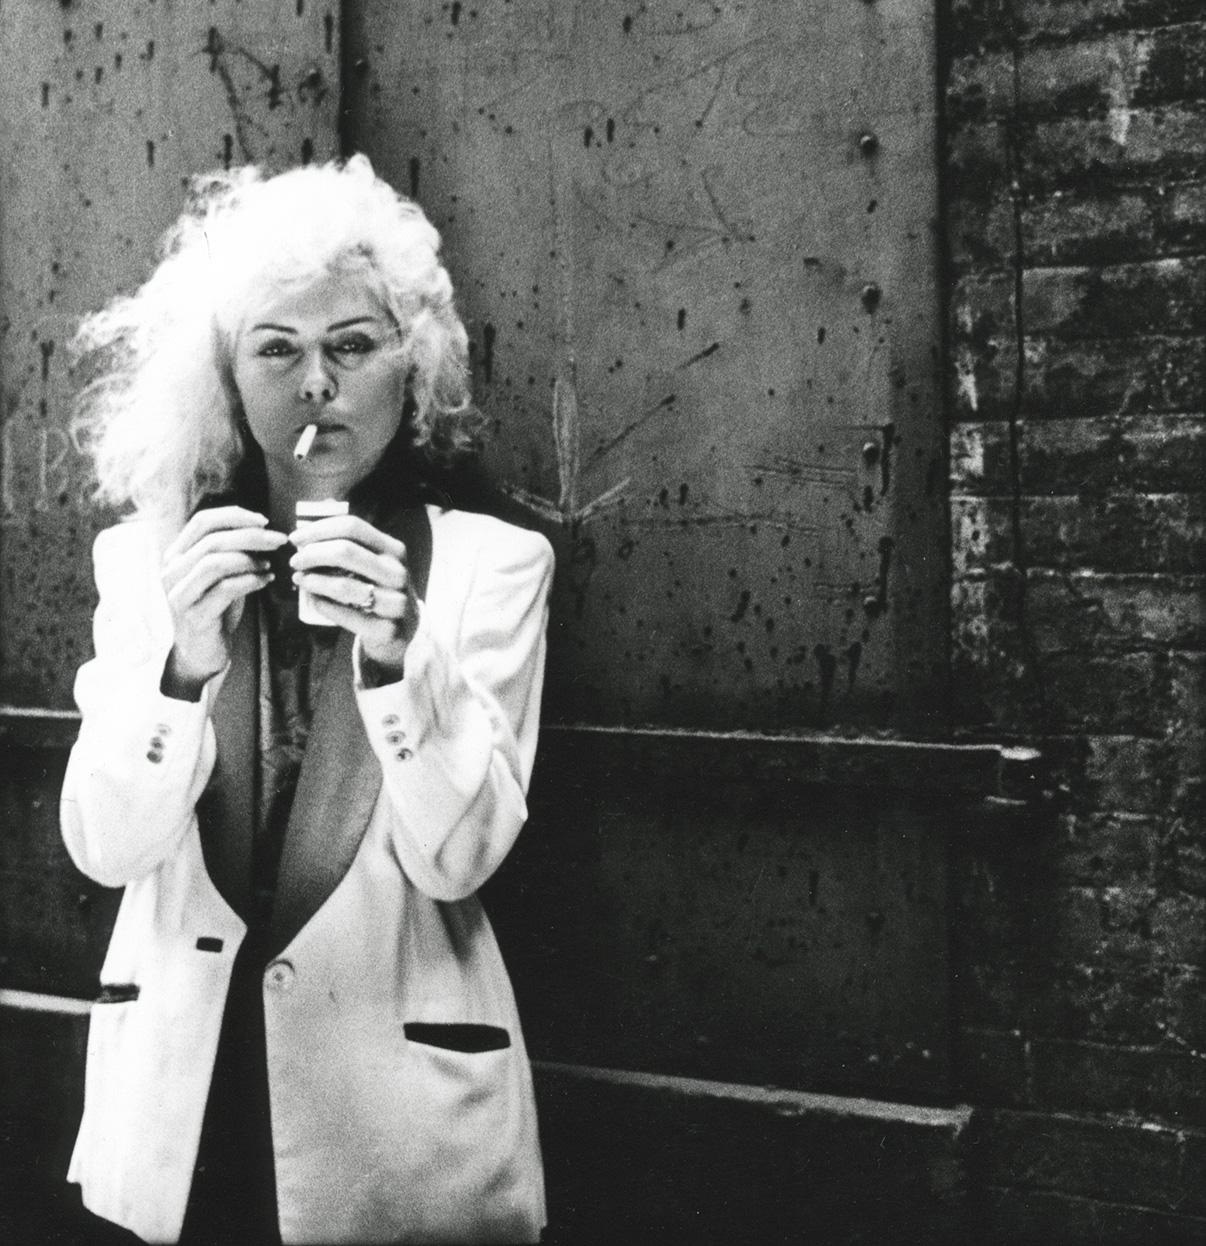 Fernando Natalici Portrait Photograph - Debbie Harry on the set of The Foreigner East Village 1977 (Blondie photograph) 